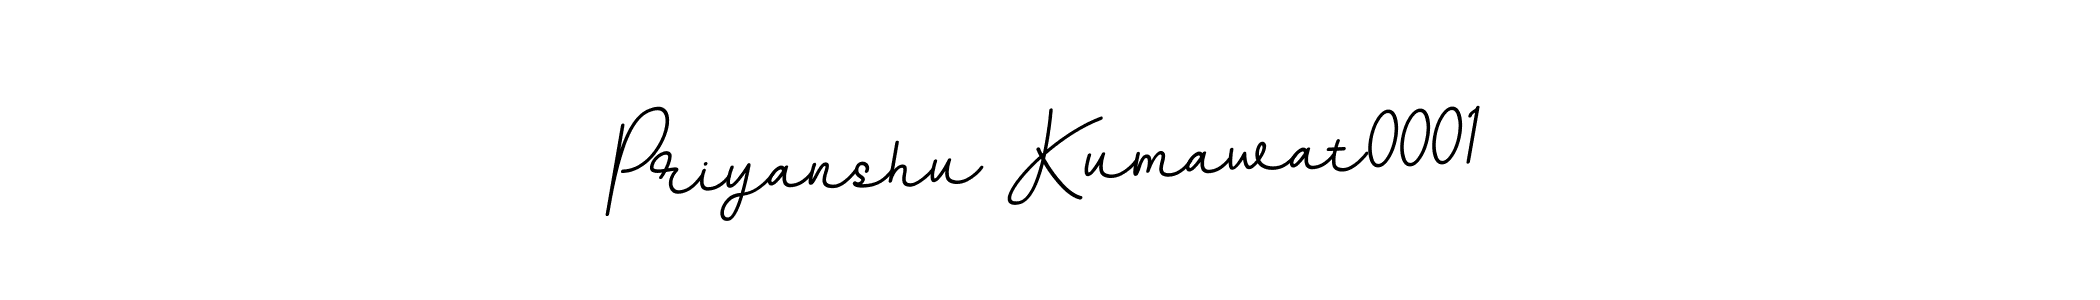 How to Draw Priyanshu Kumawat0001 signature style? BallpointsItalic-DORy9 is a latest design signature styles for name Priyanshu Kumawat0001. Priyanshu Kumawat0001 signature style 11 images and pictures png